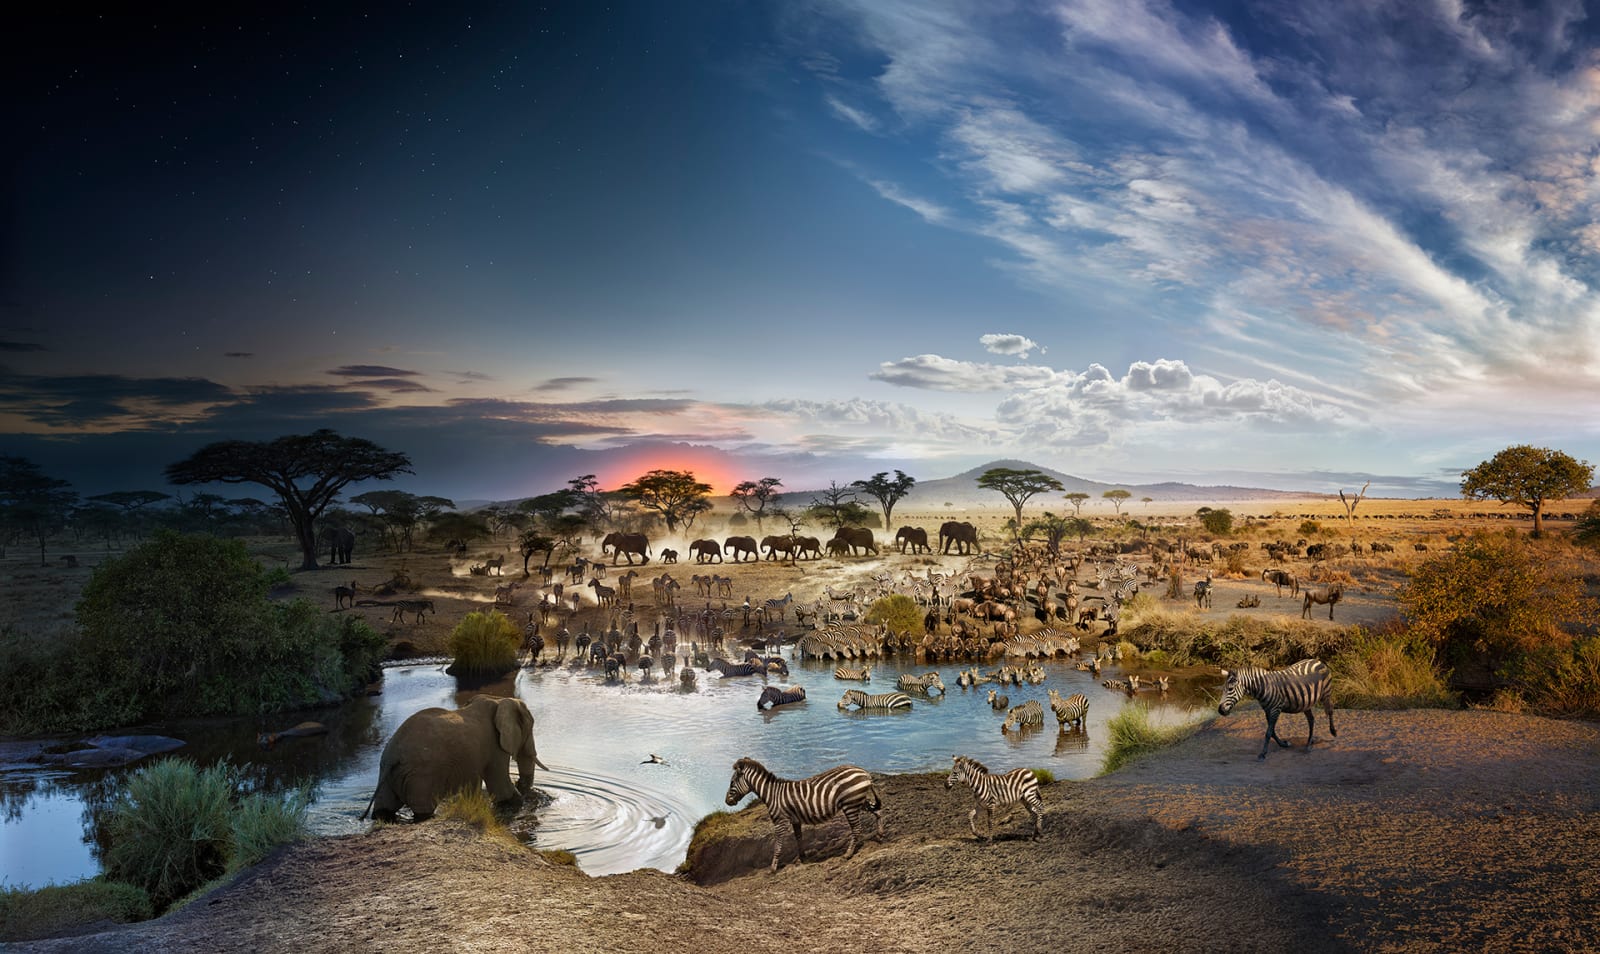 Stephen Wilkes, Serengeti National Park, Tanzania, Day to Night™, 2015